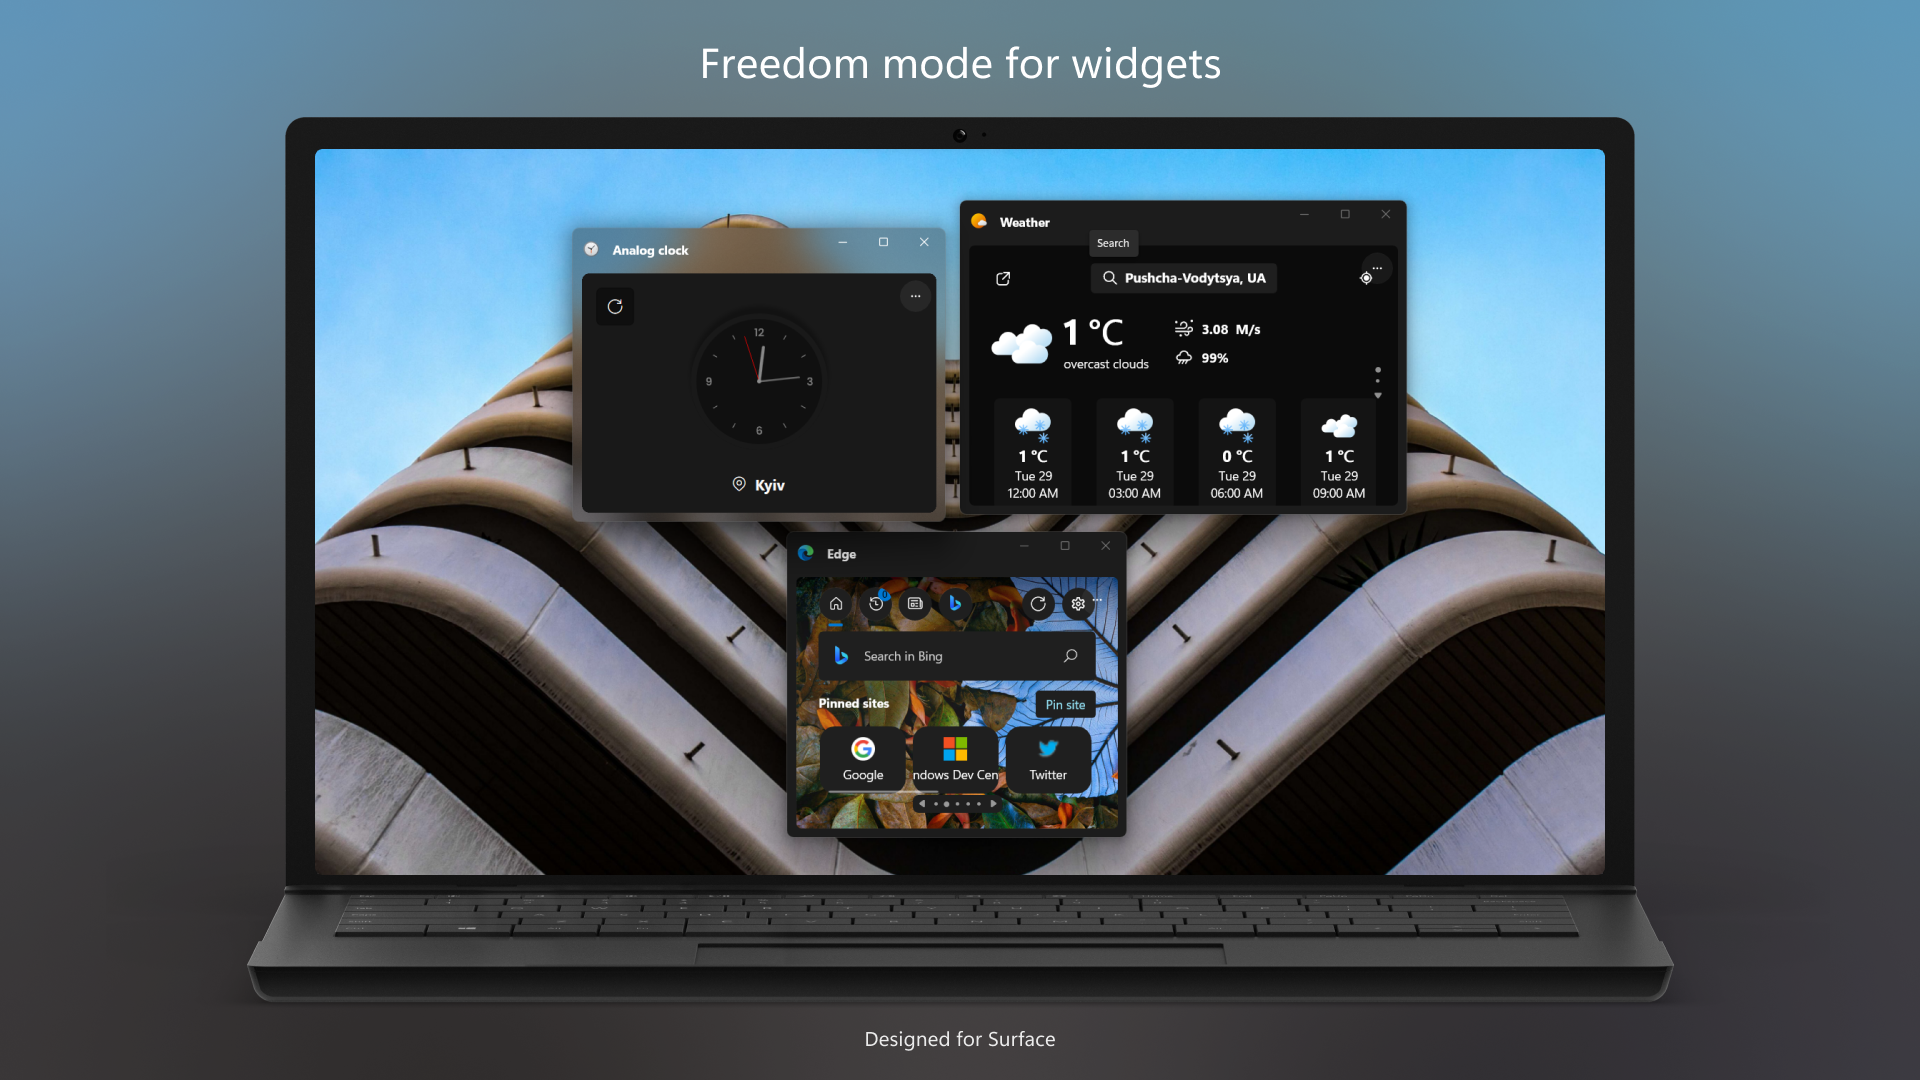 Power Widgets  - freedom mode for widgets